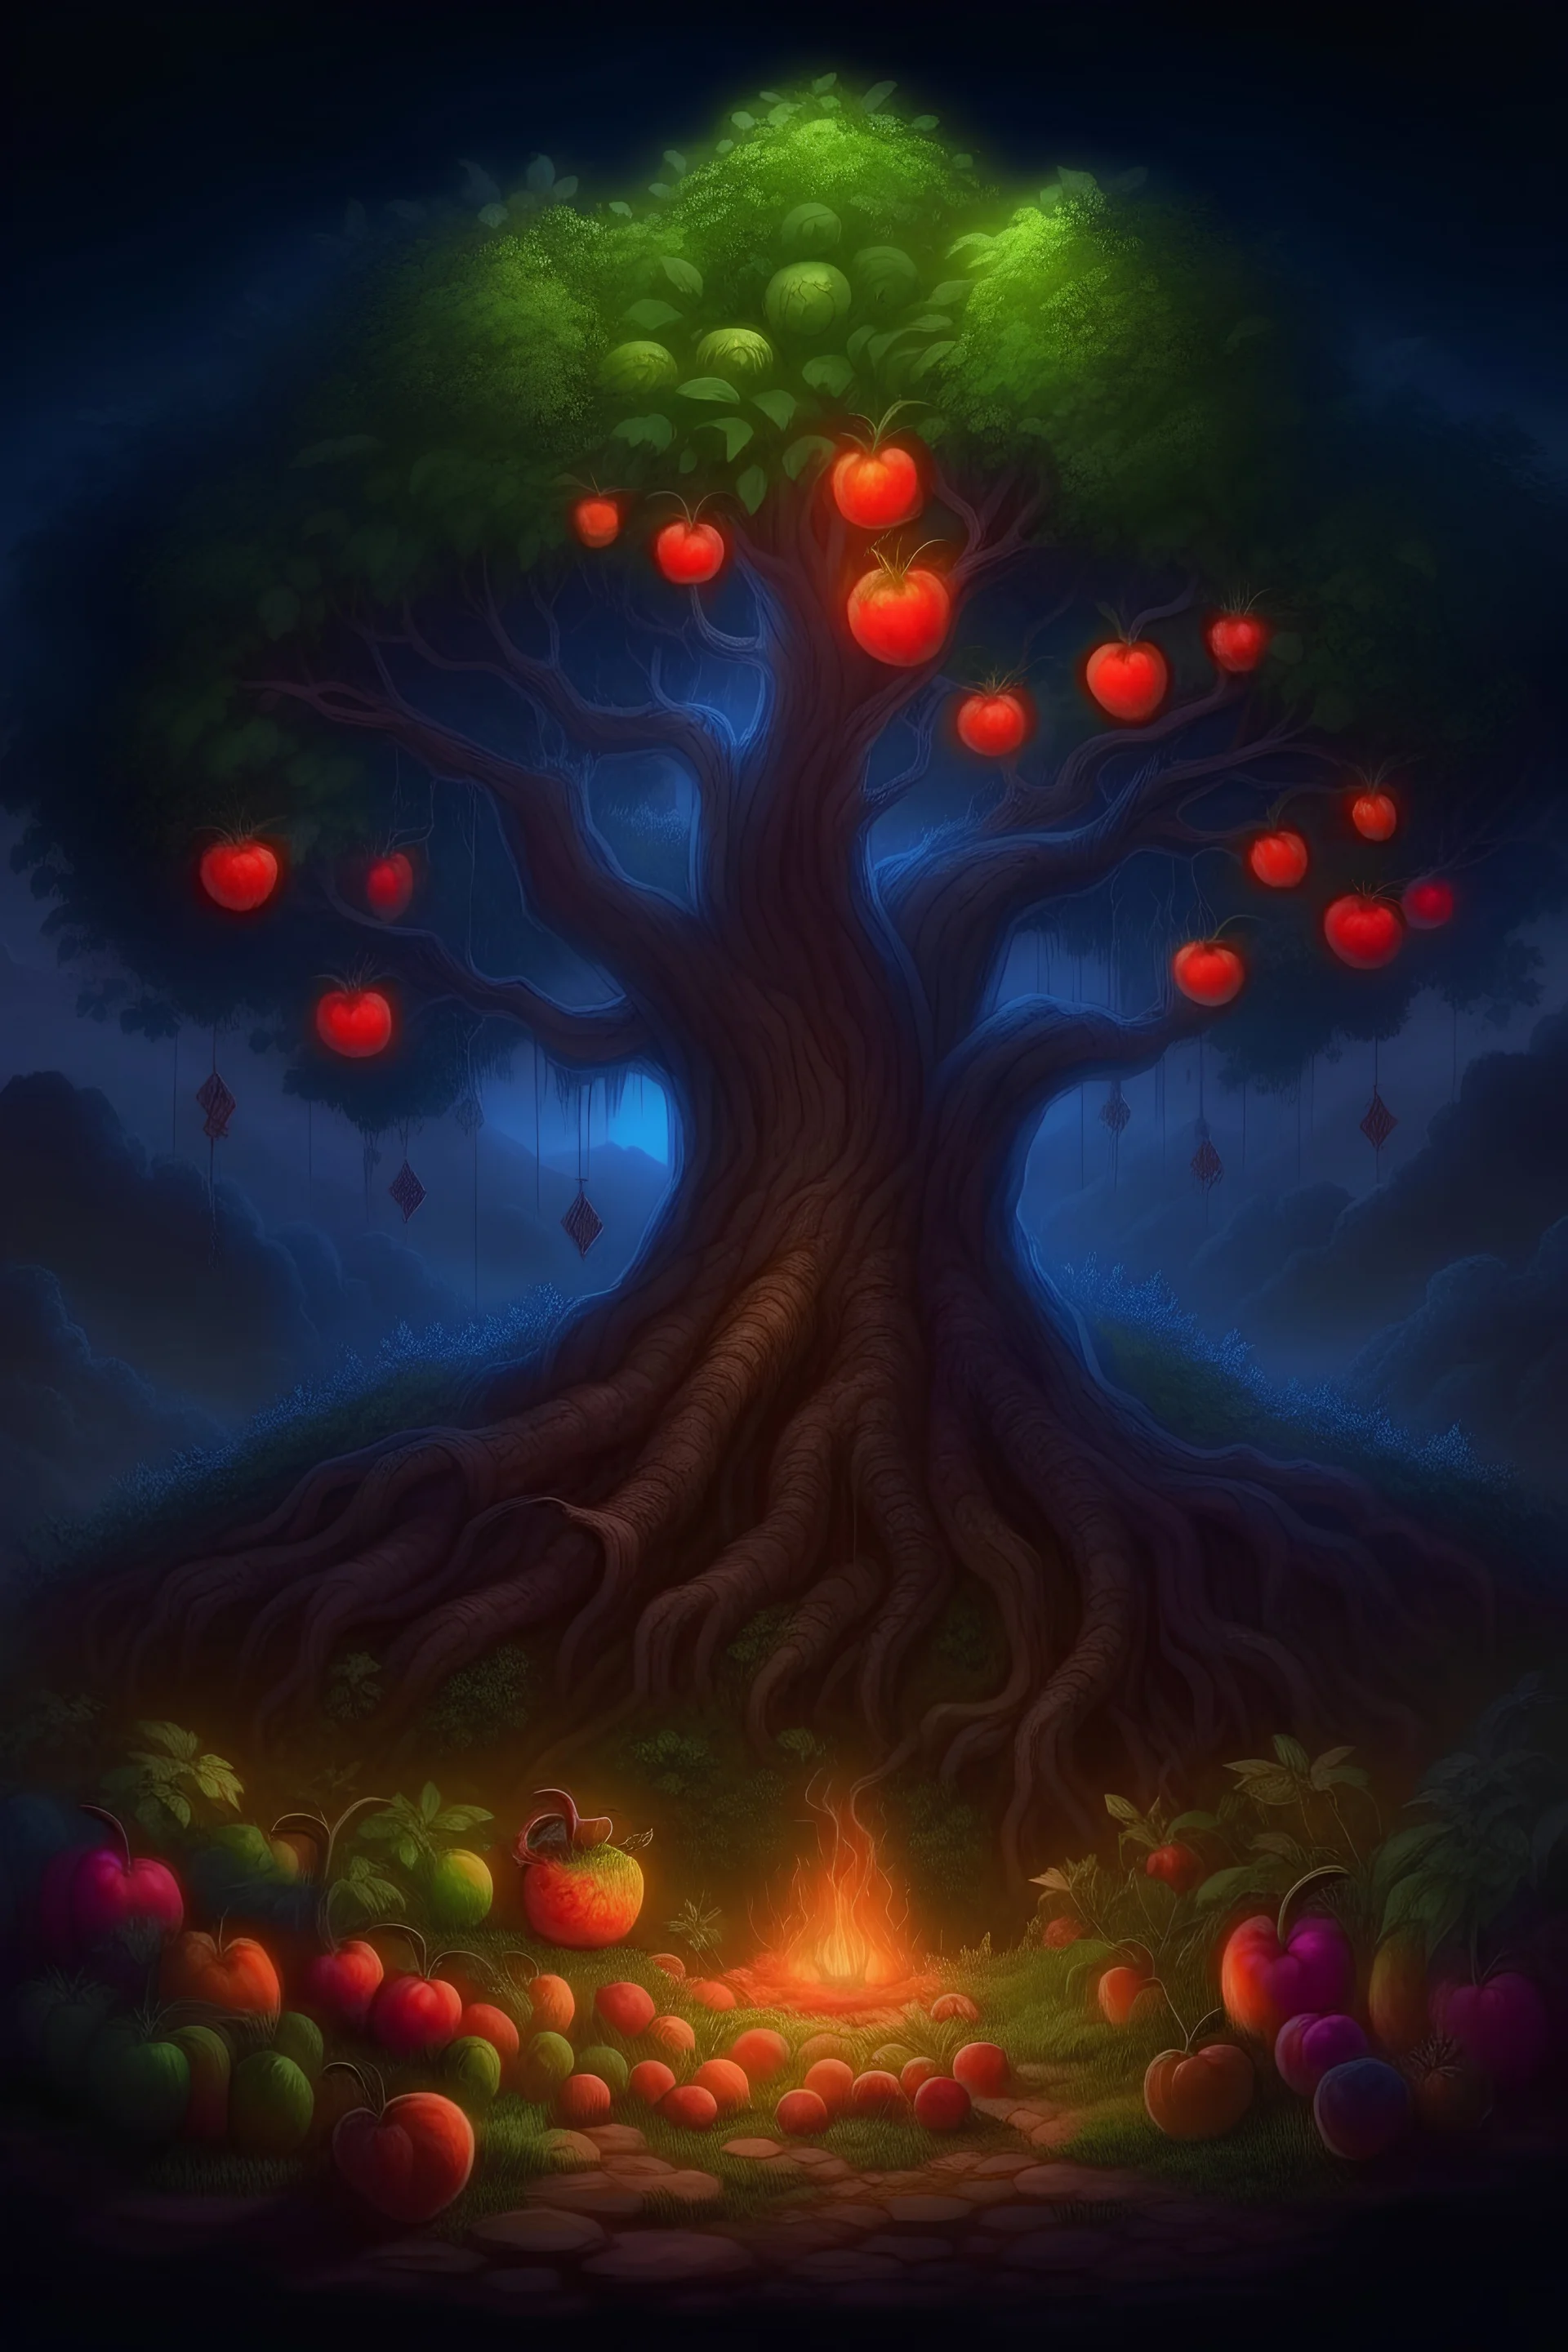 Hearthstone art, Magical Farmer growing fruit trees containing an ydillic scenery dark background